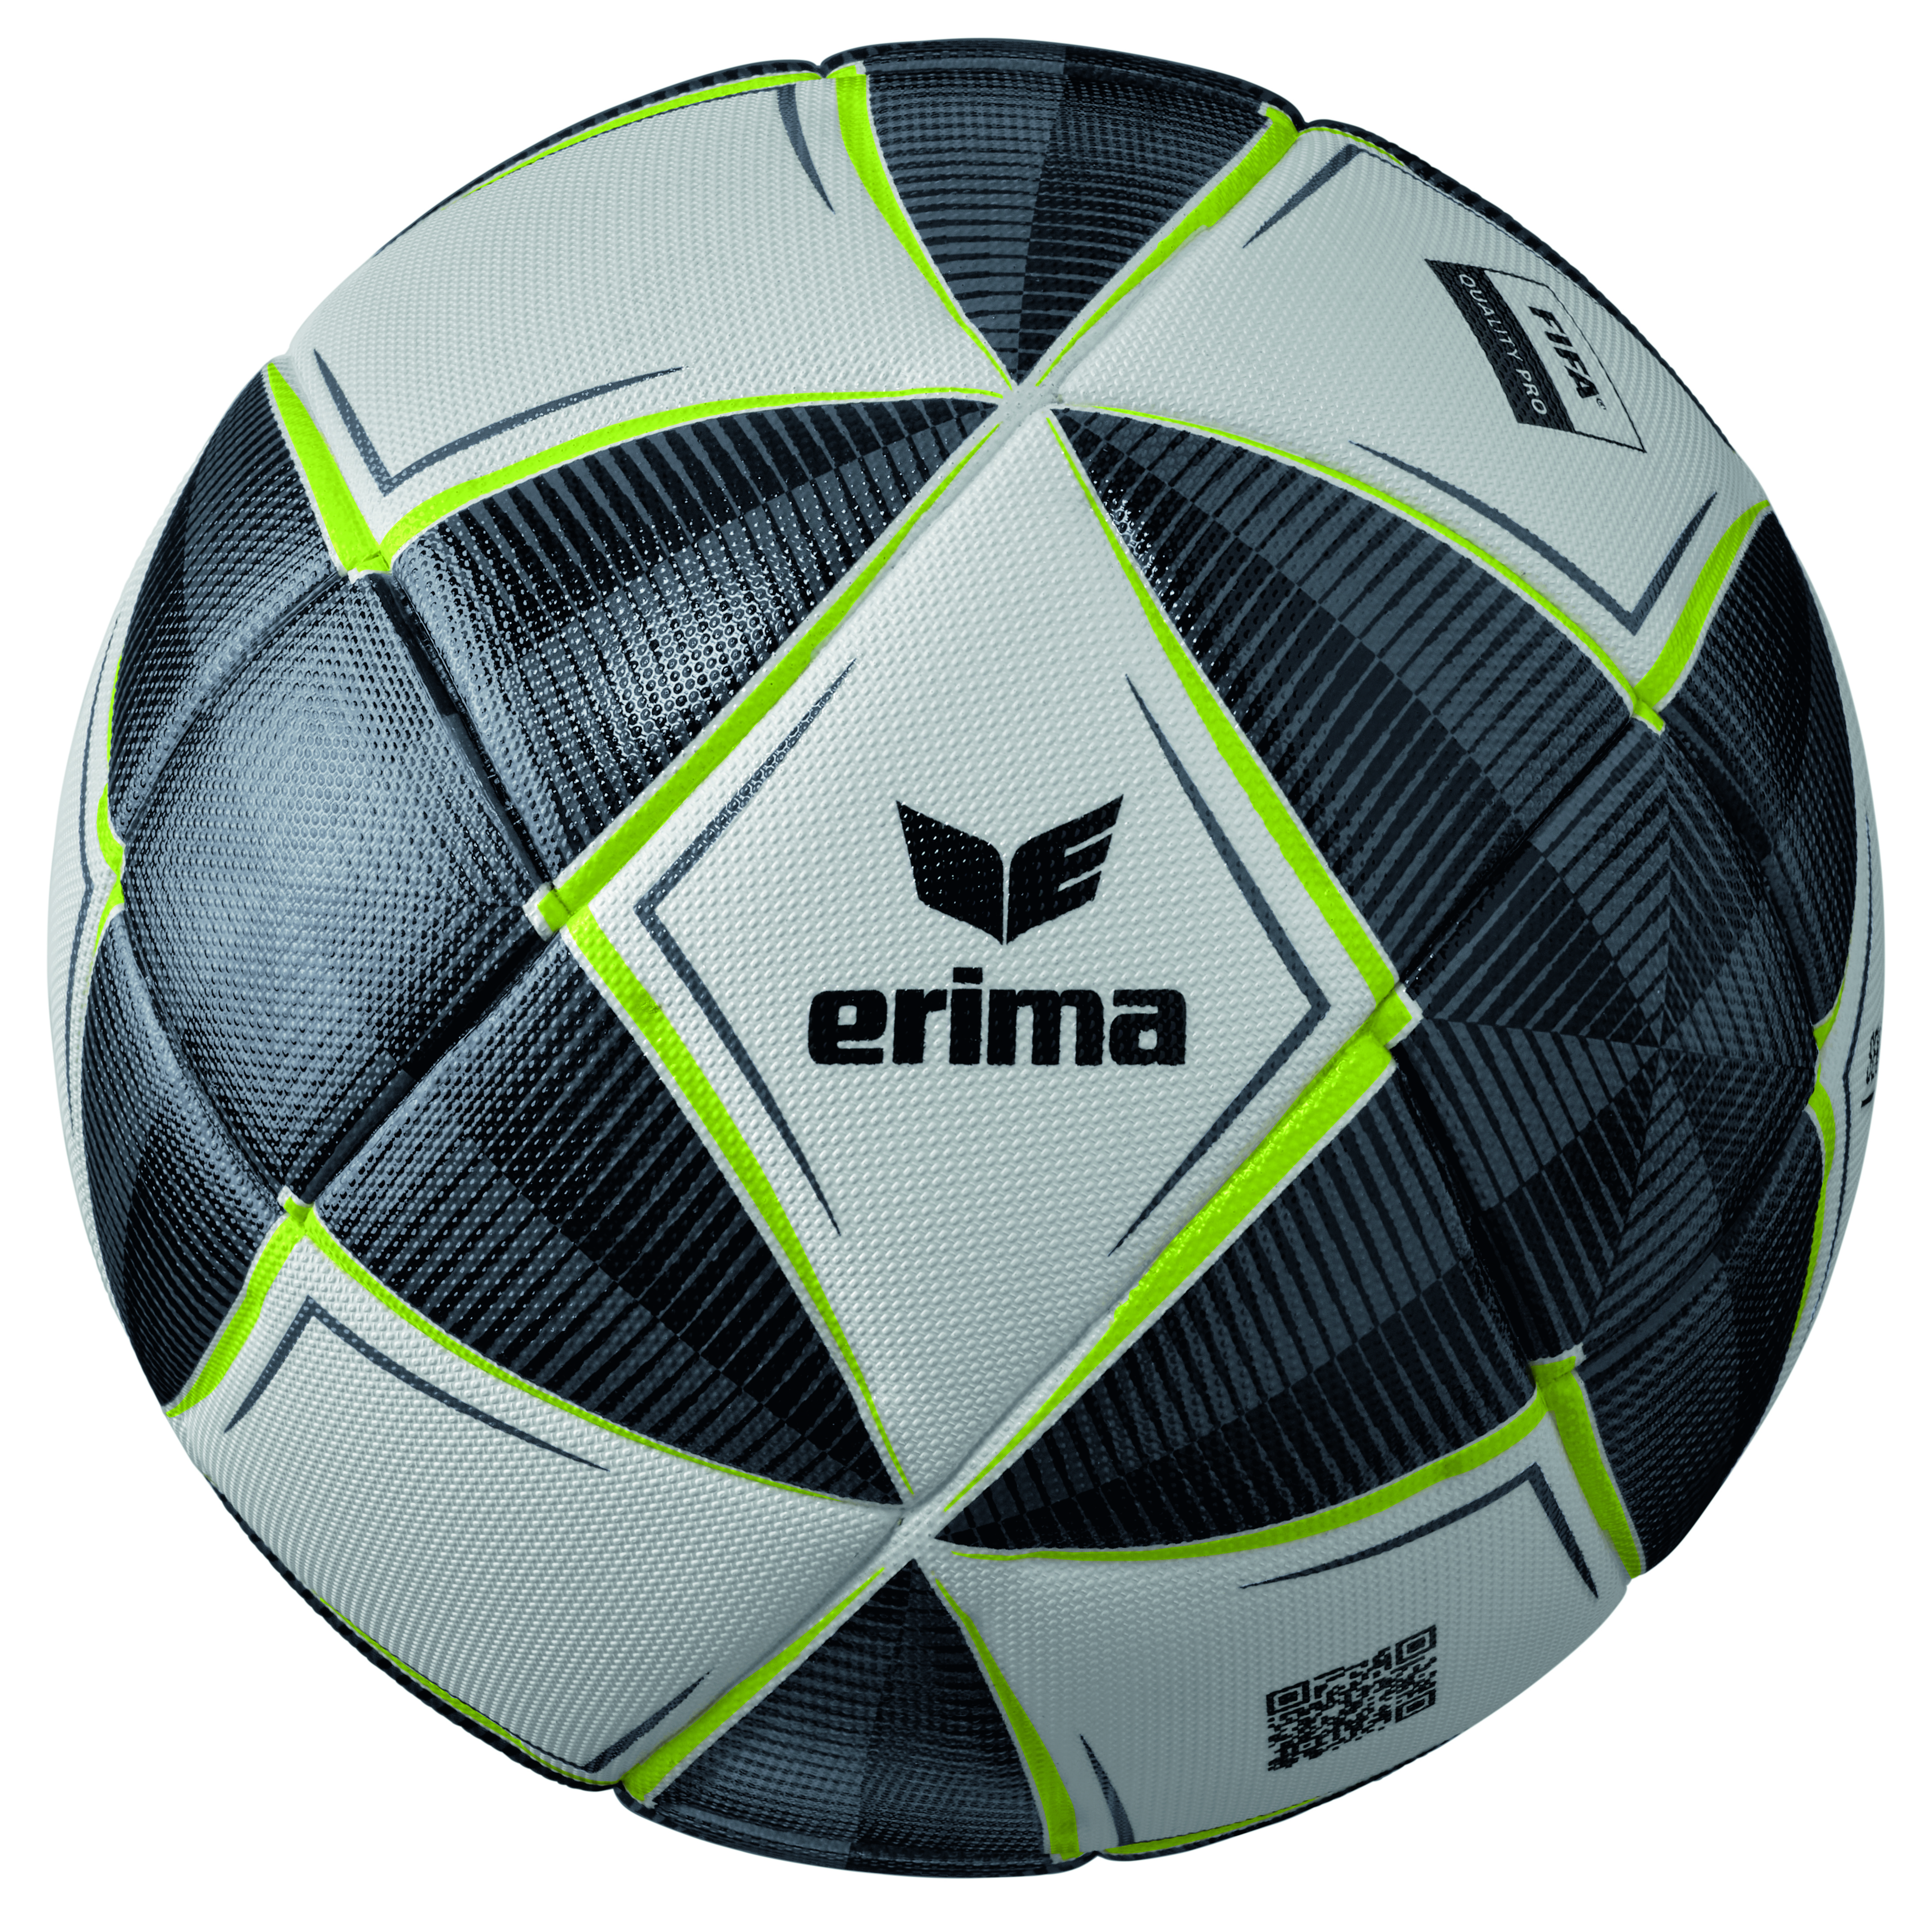 Erima Fußball Senzor-Star Match Gr. 5 schwarz-grau